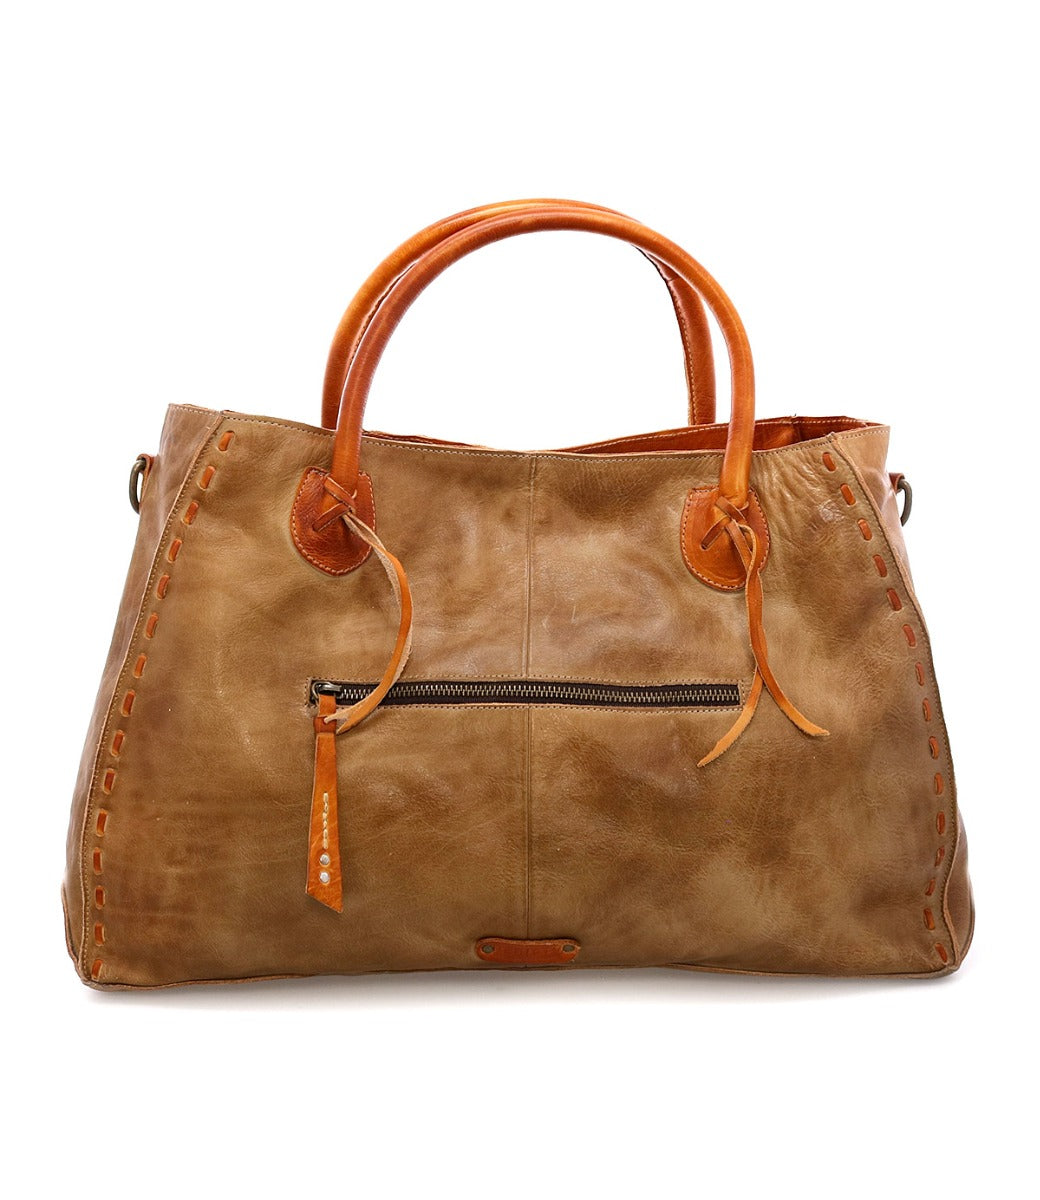 A Rockaway by Bed Stu tan leather tote bag with orange handles.